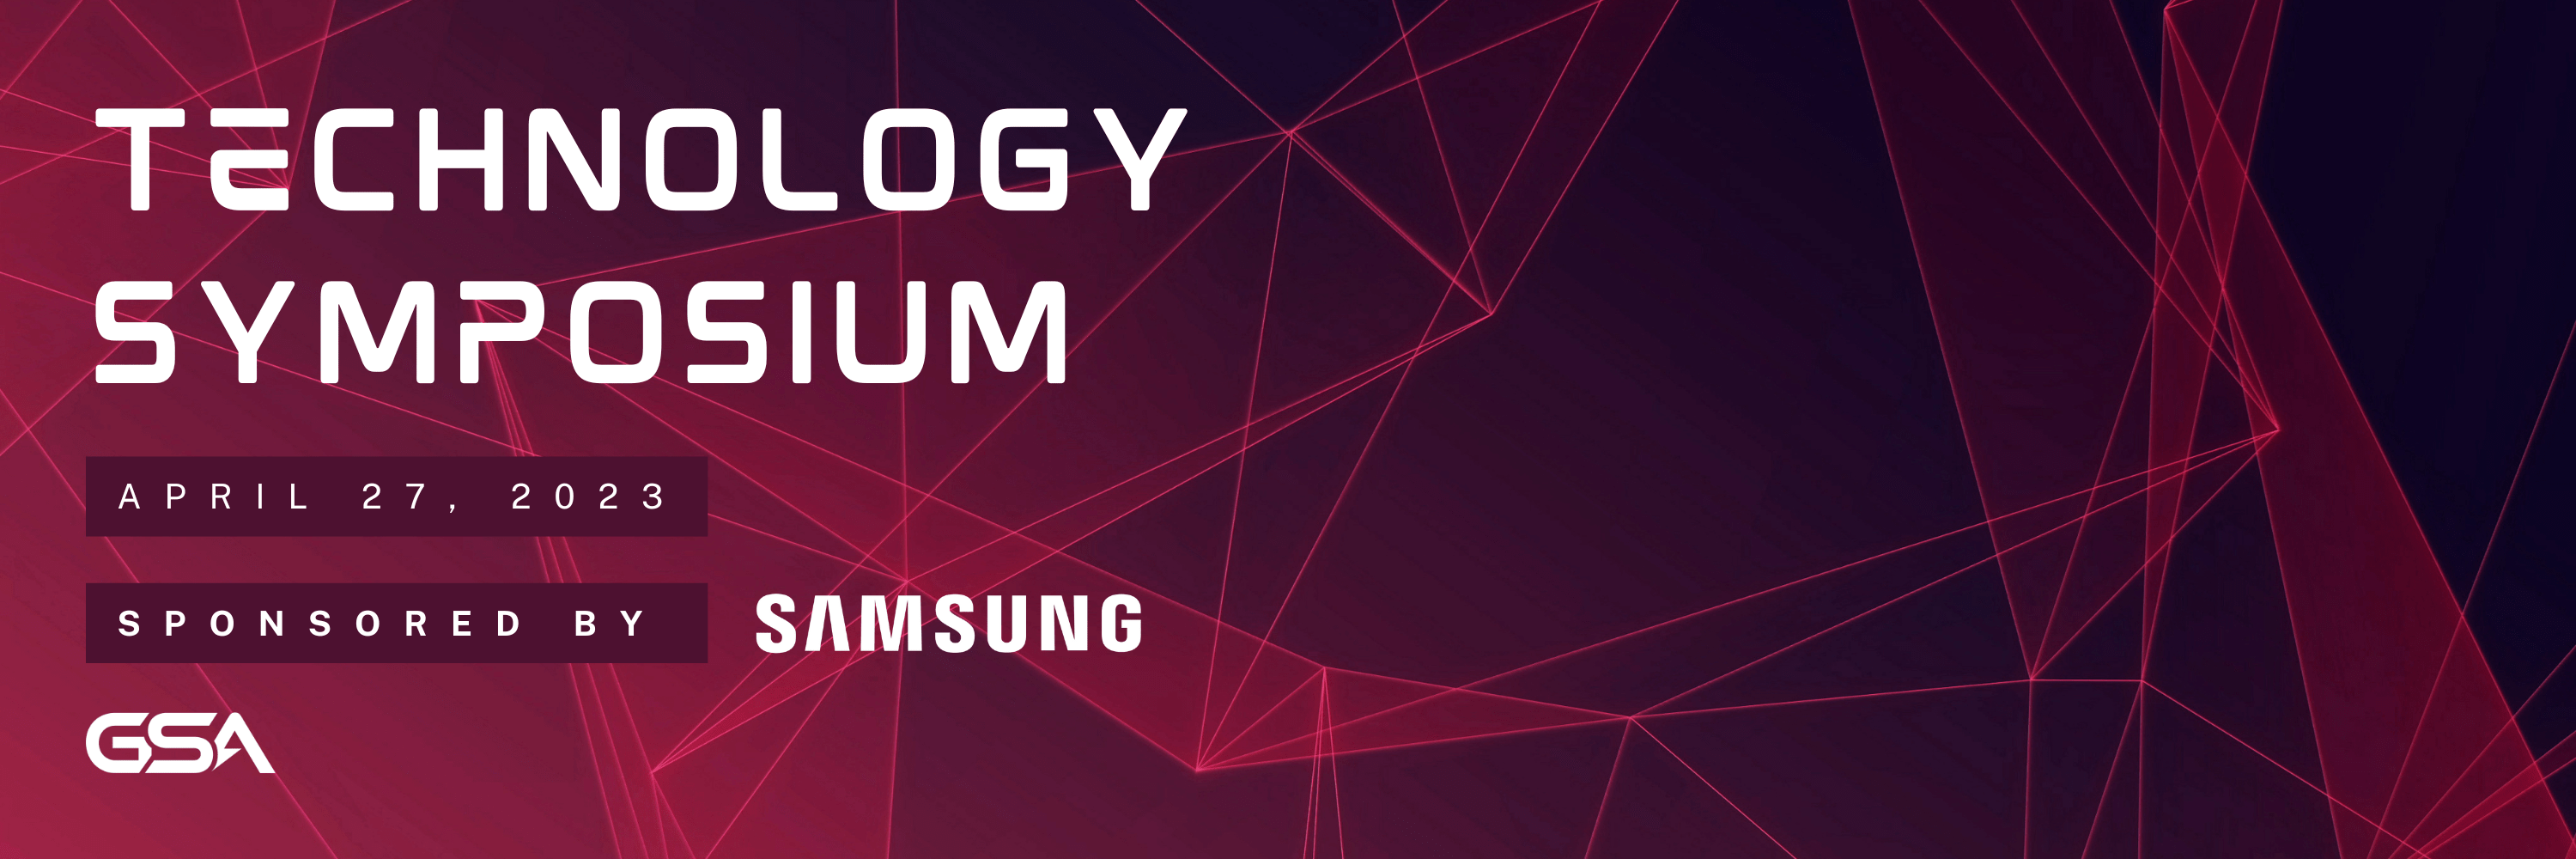 2023 Technology Symposium